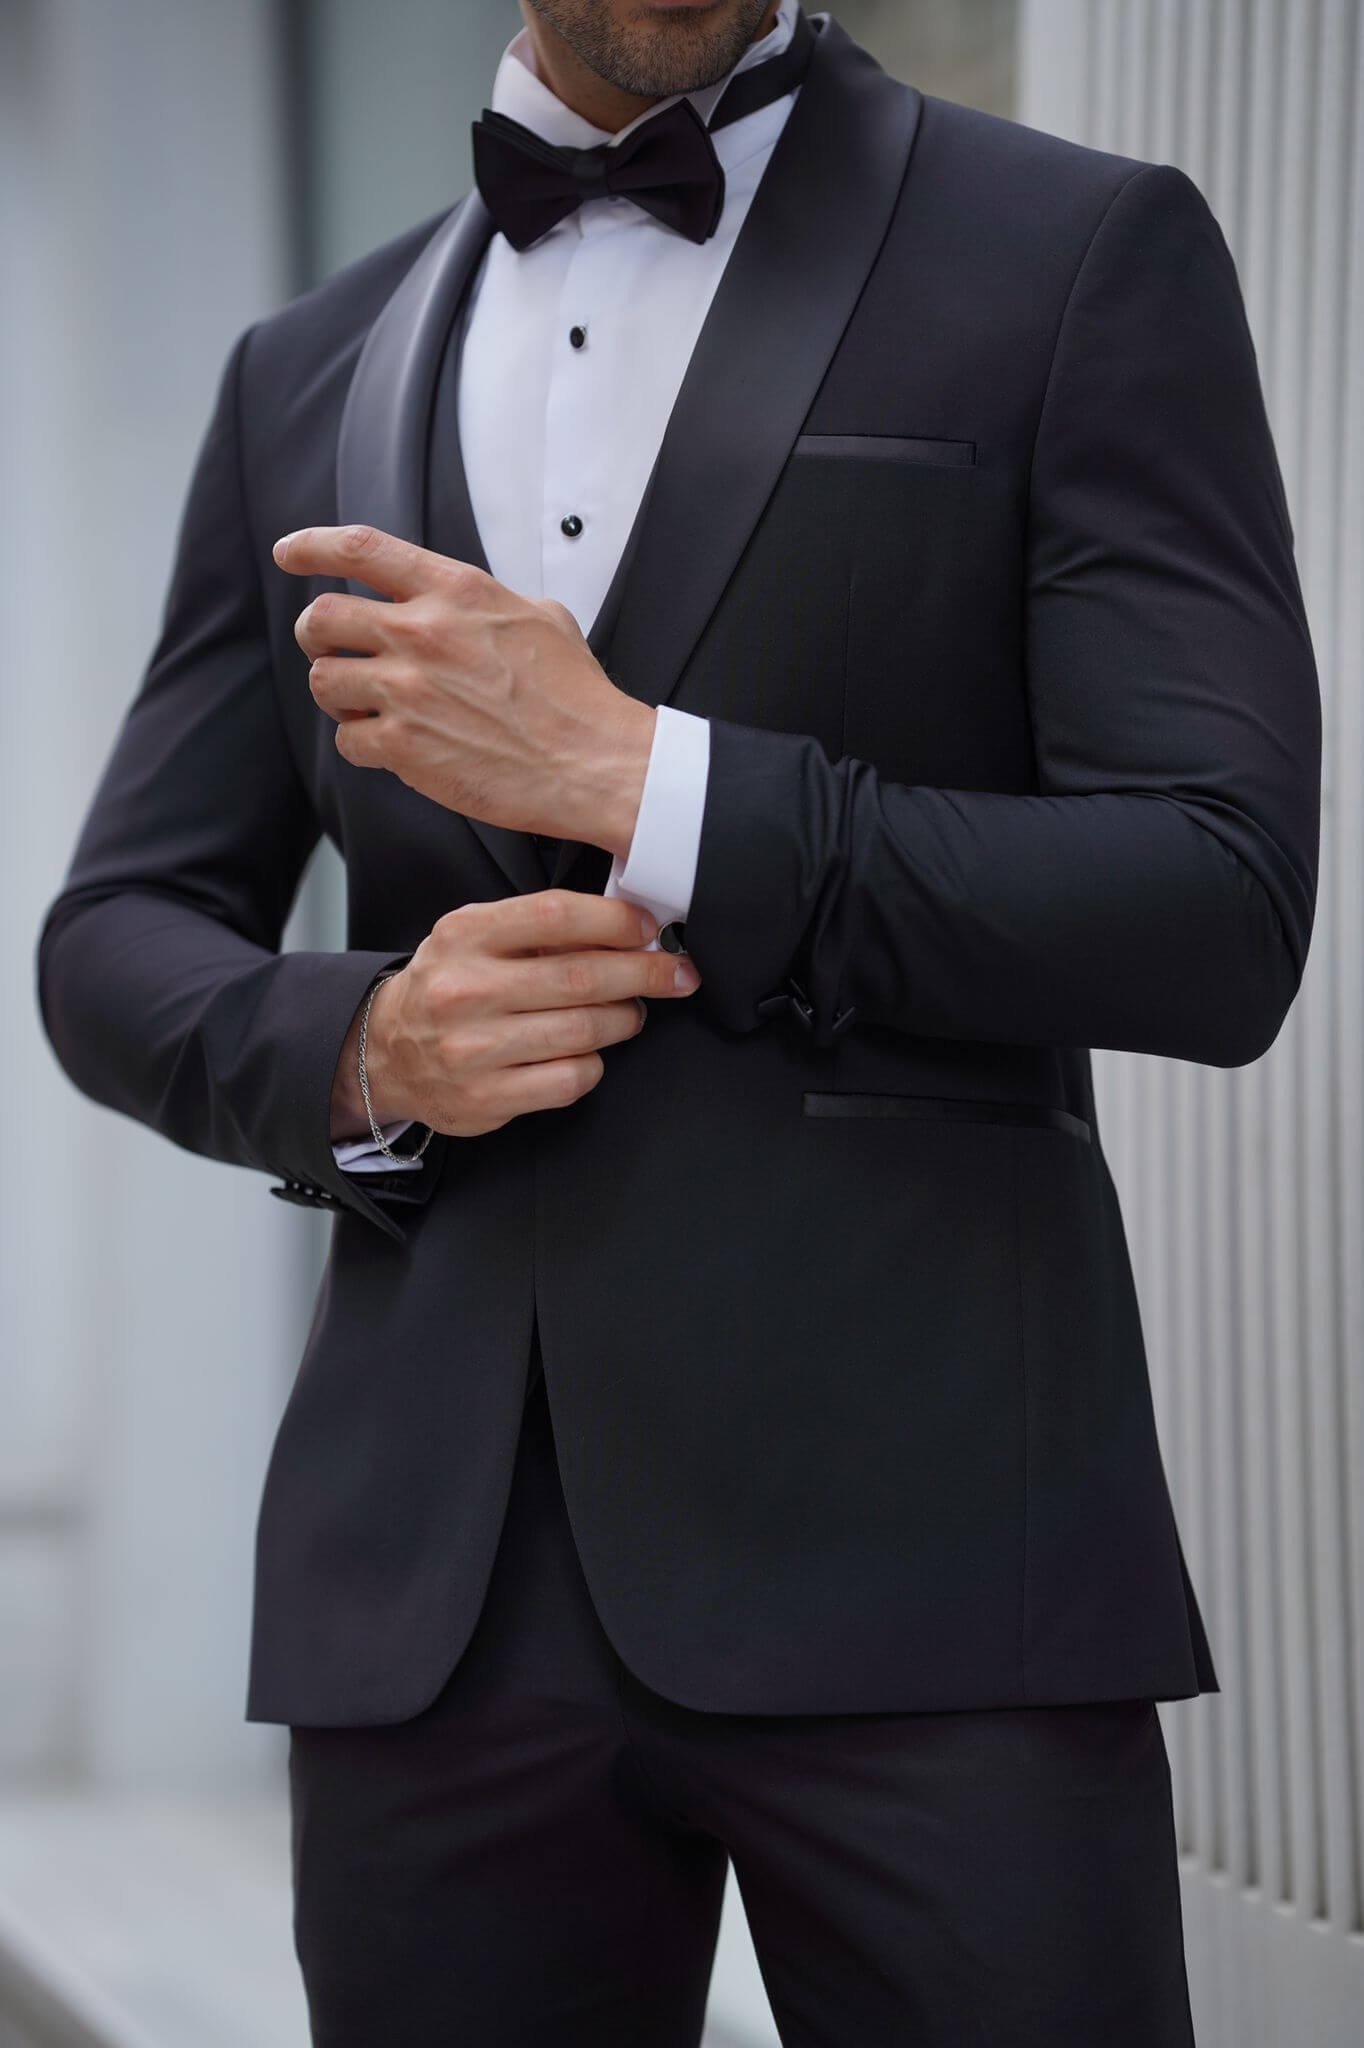 A Slim-Fit Shawl Collar Black Tuxedo Suit on display. 